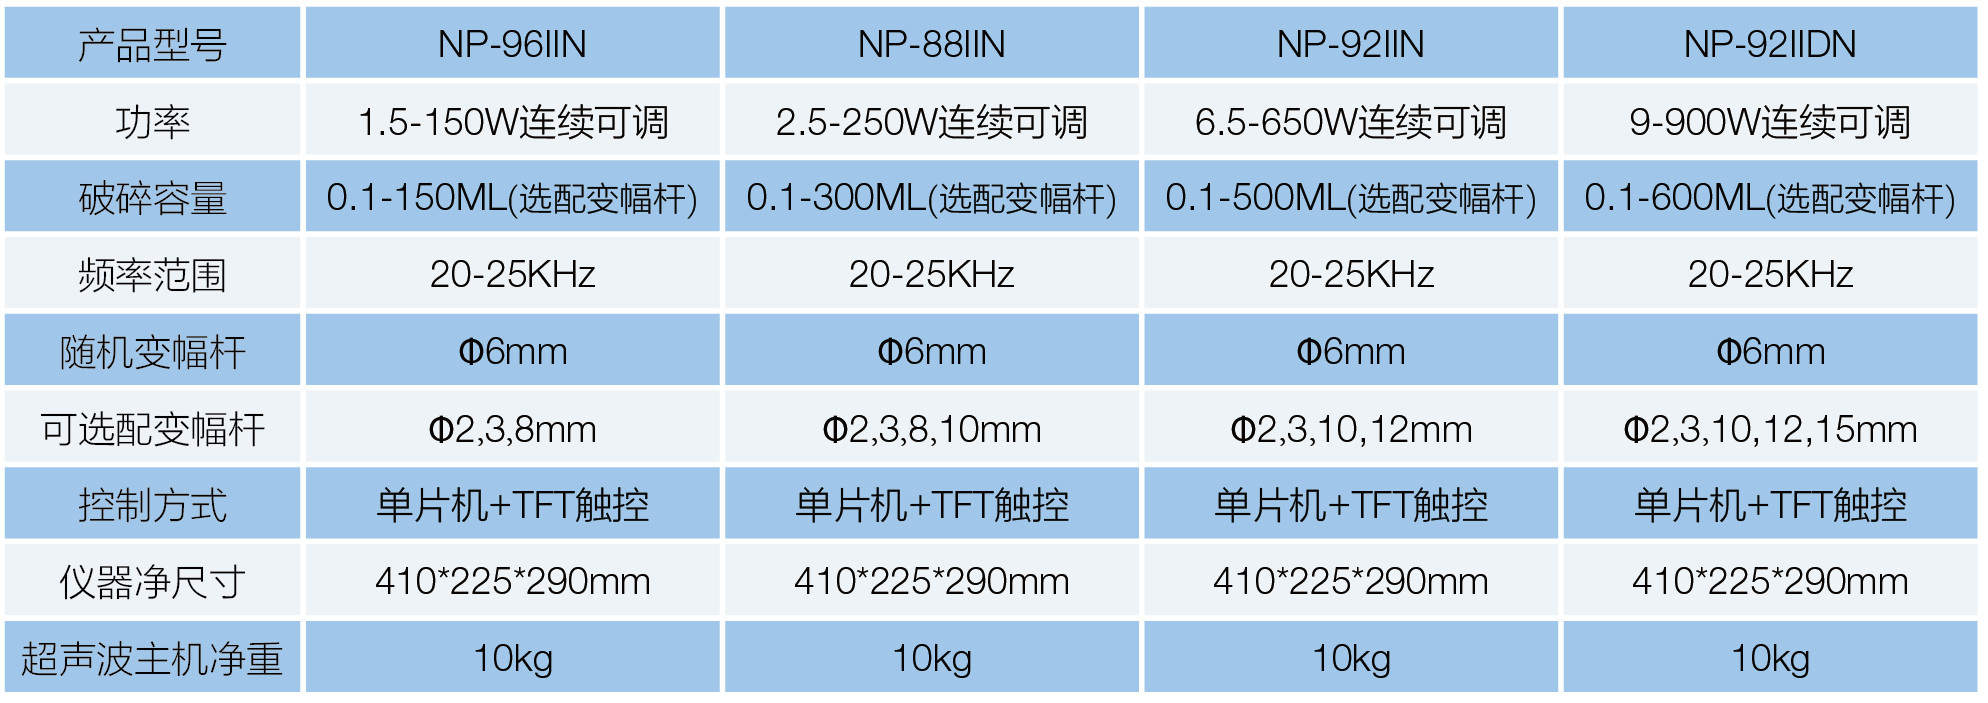 NP-88IIN 超声波细胞粉碎机(图1)